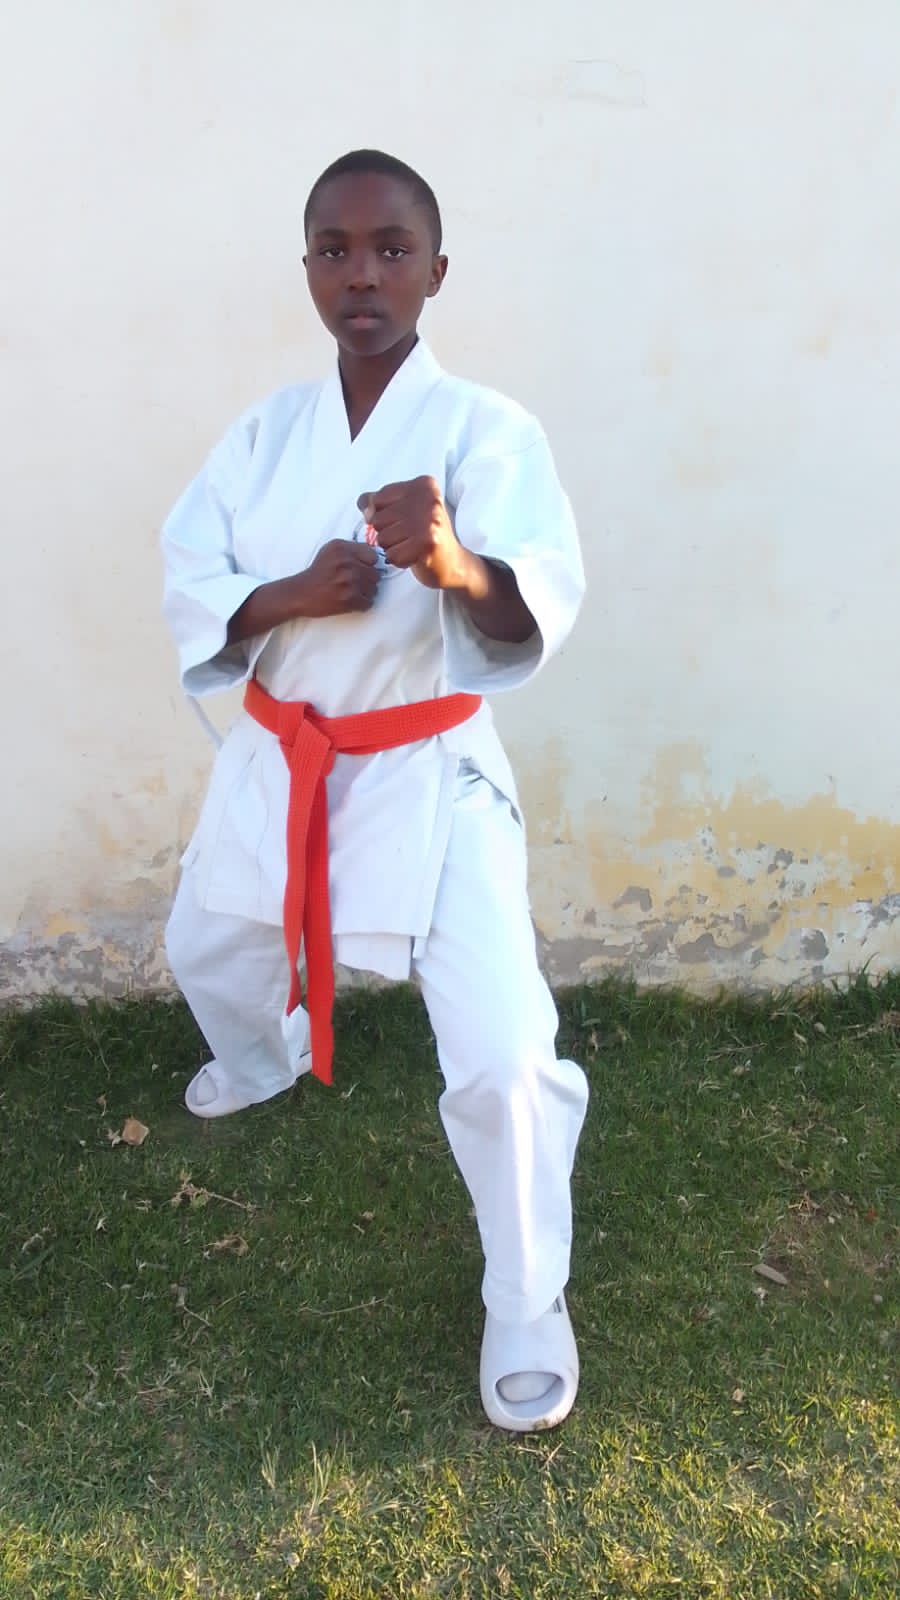 Qhama Chotsheni of Joza karate club